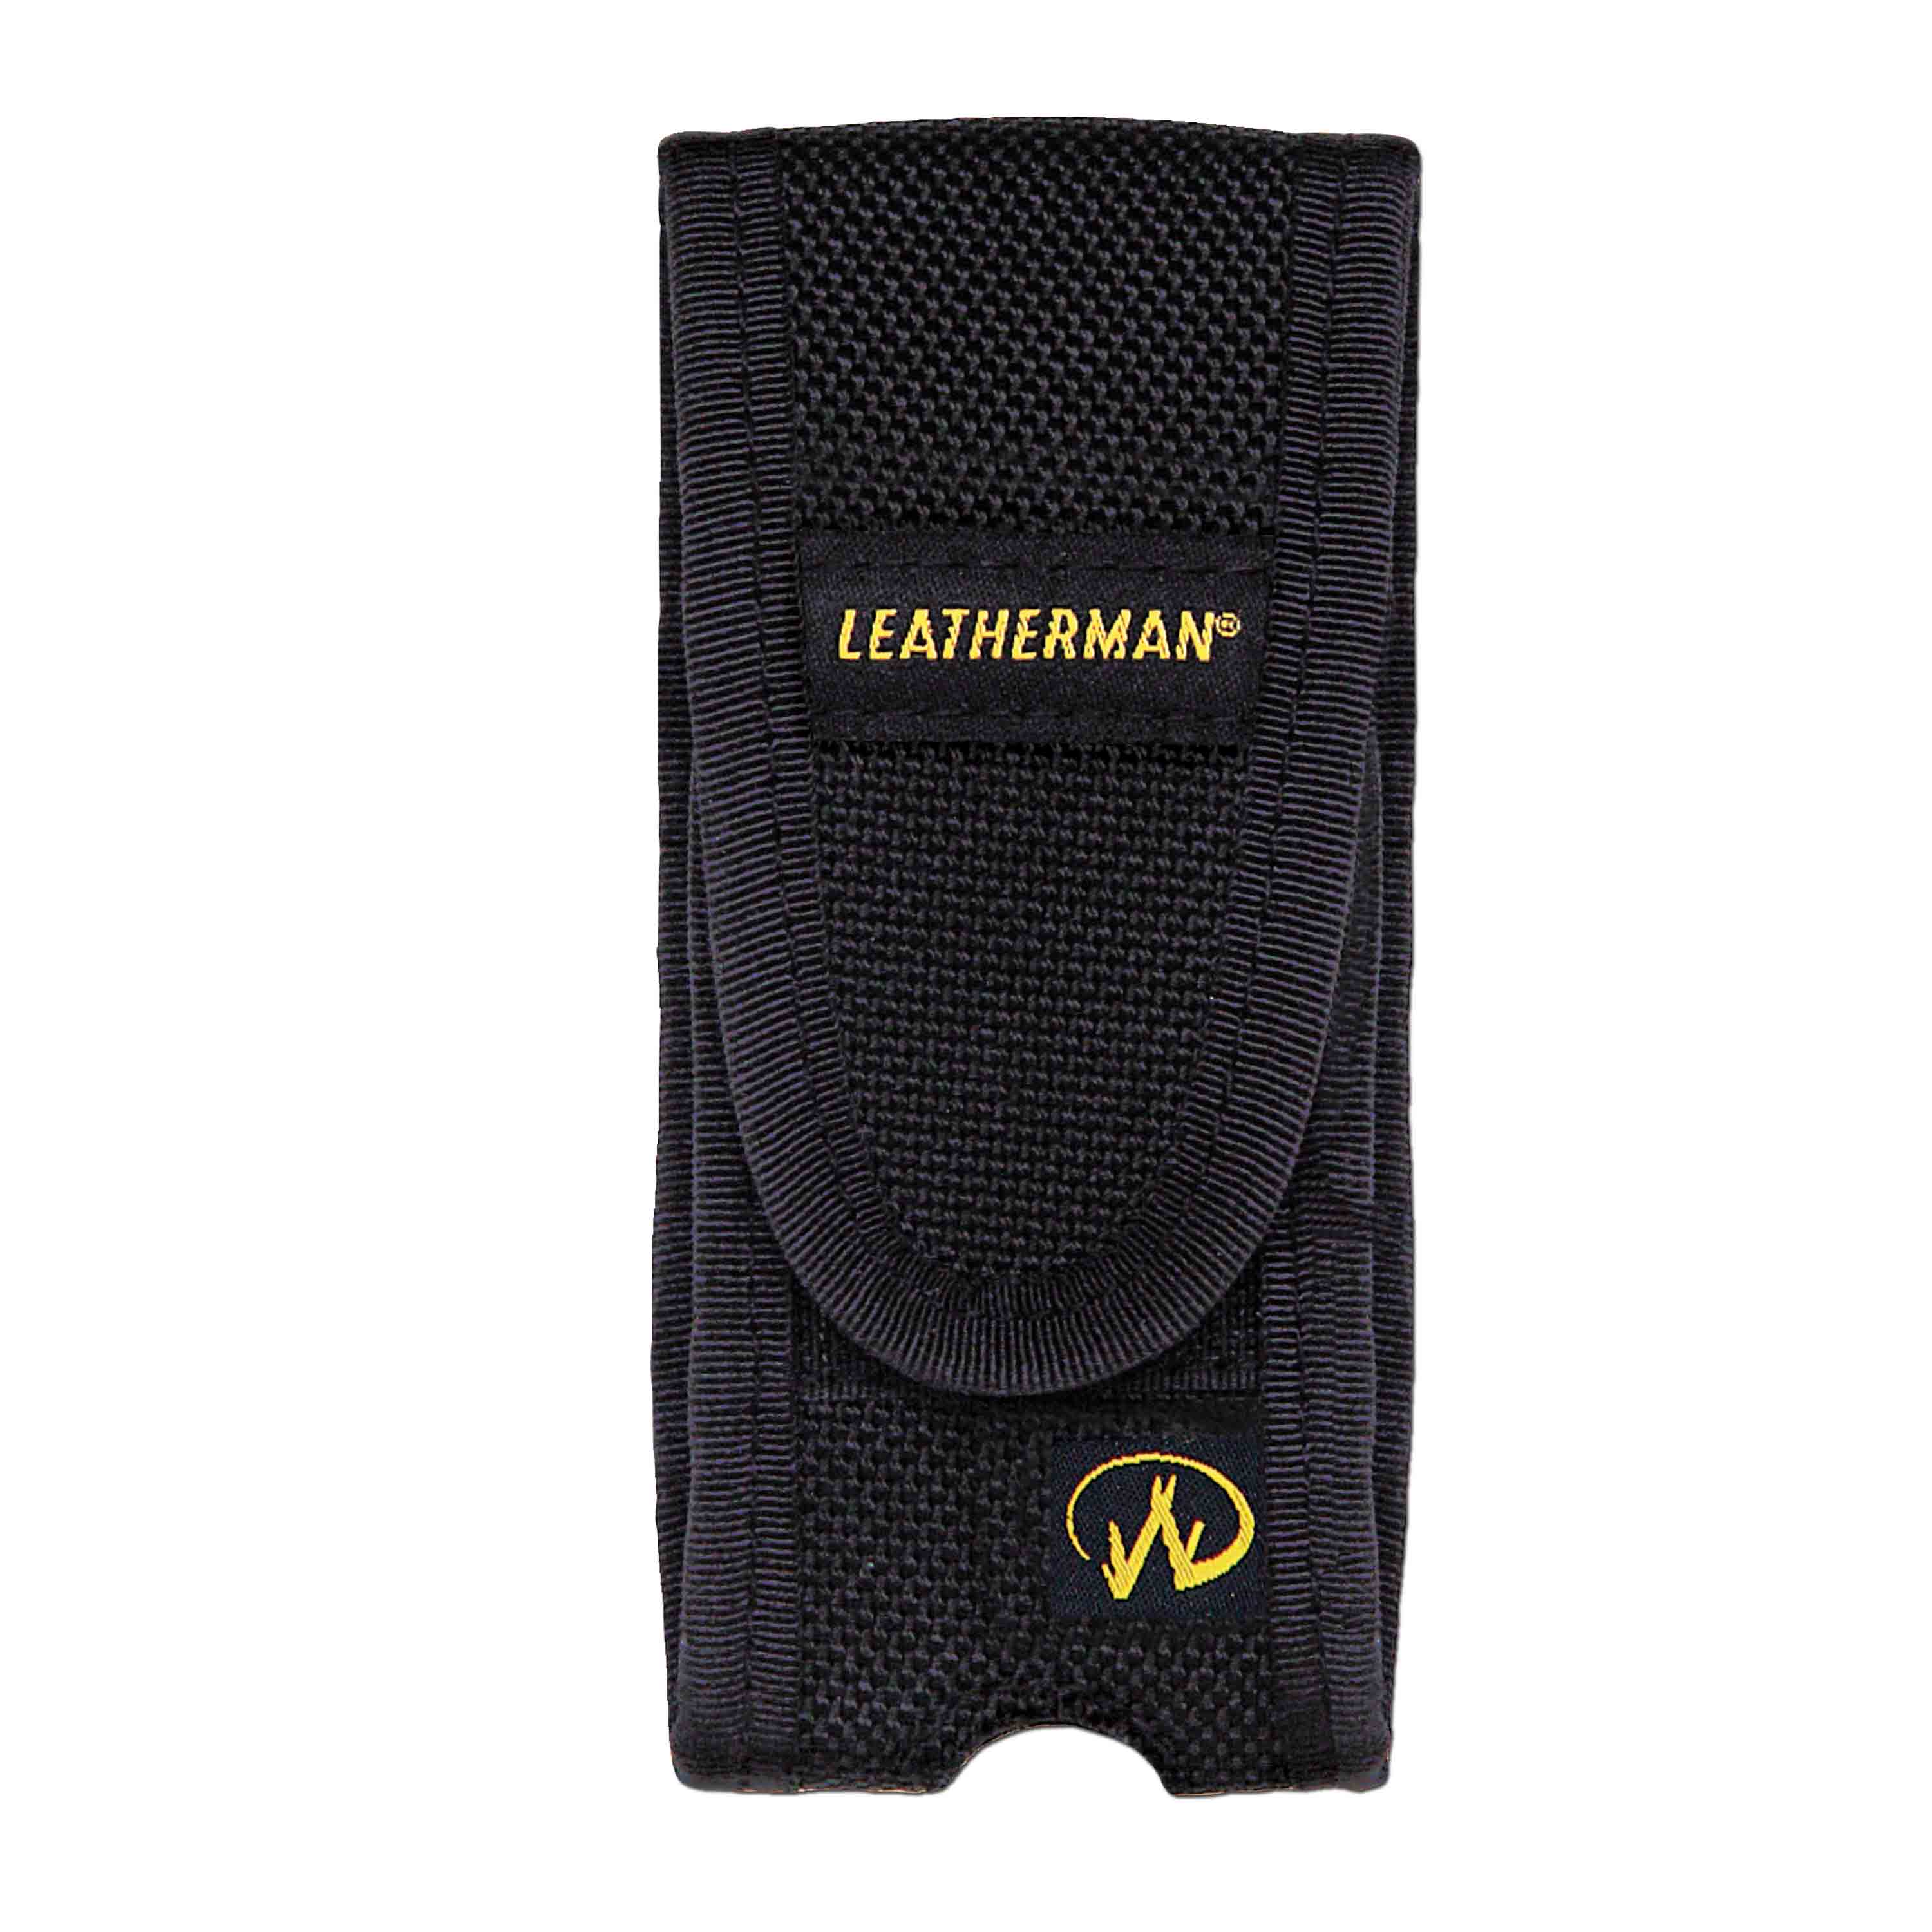 Leatherman nylon case